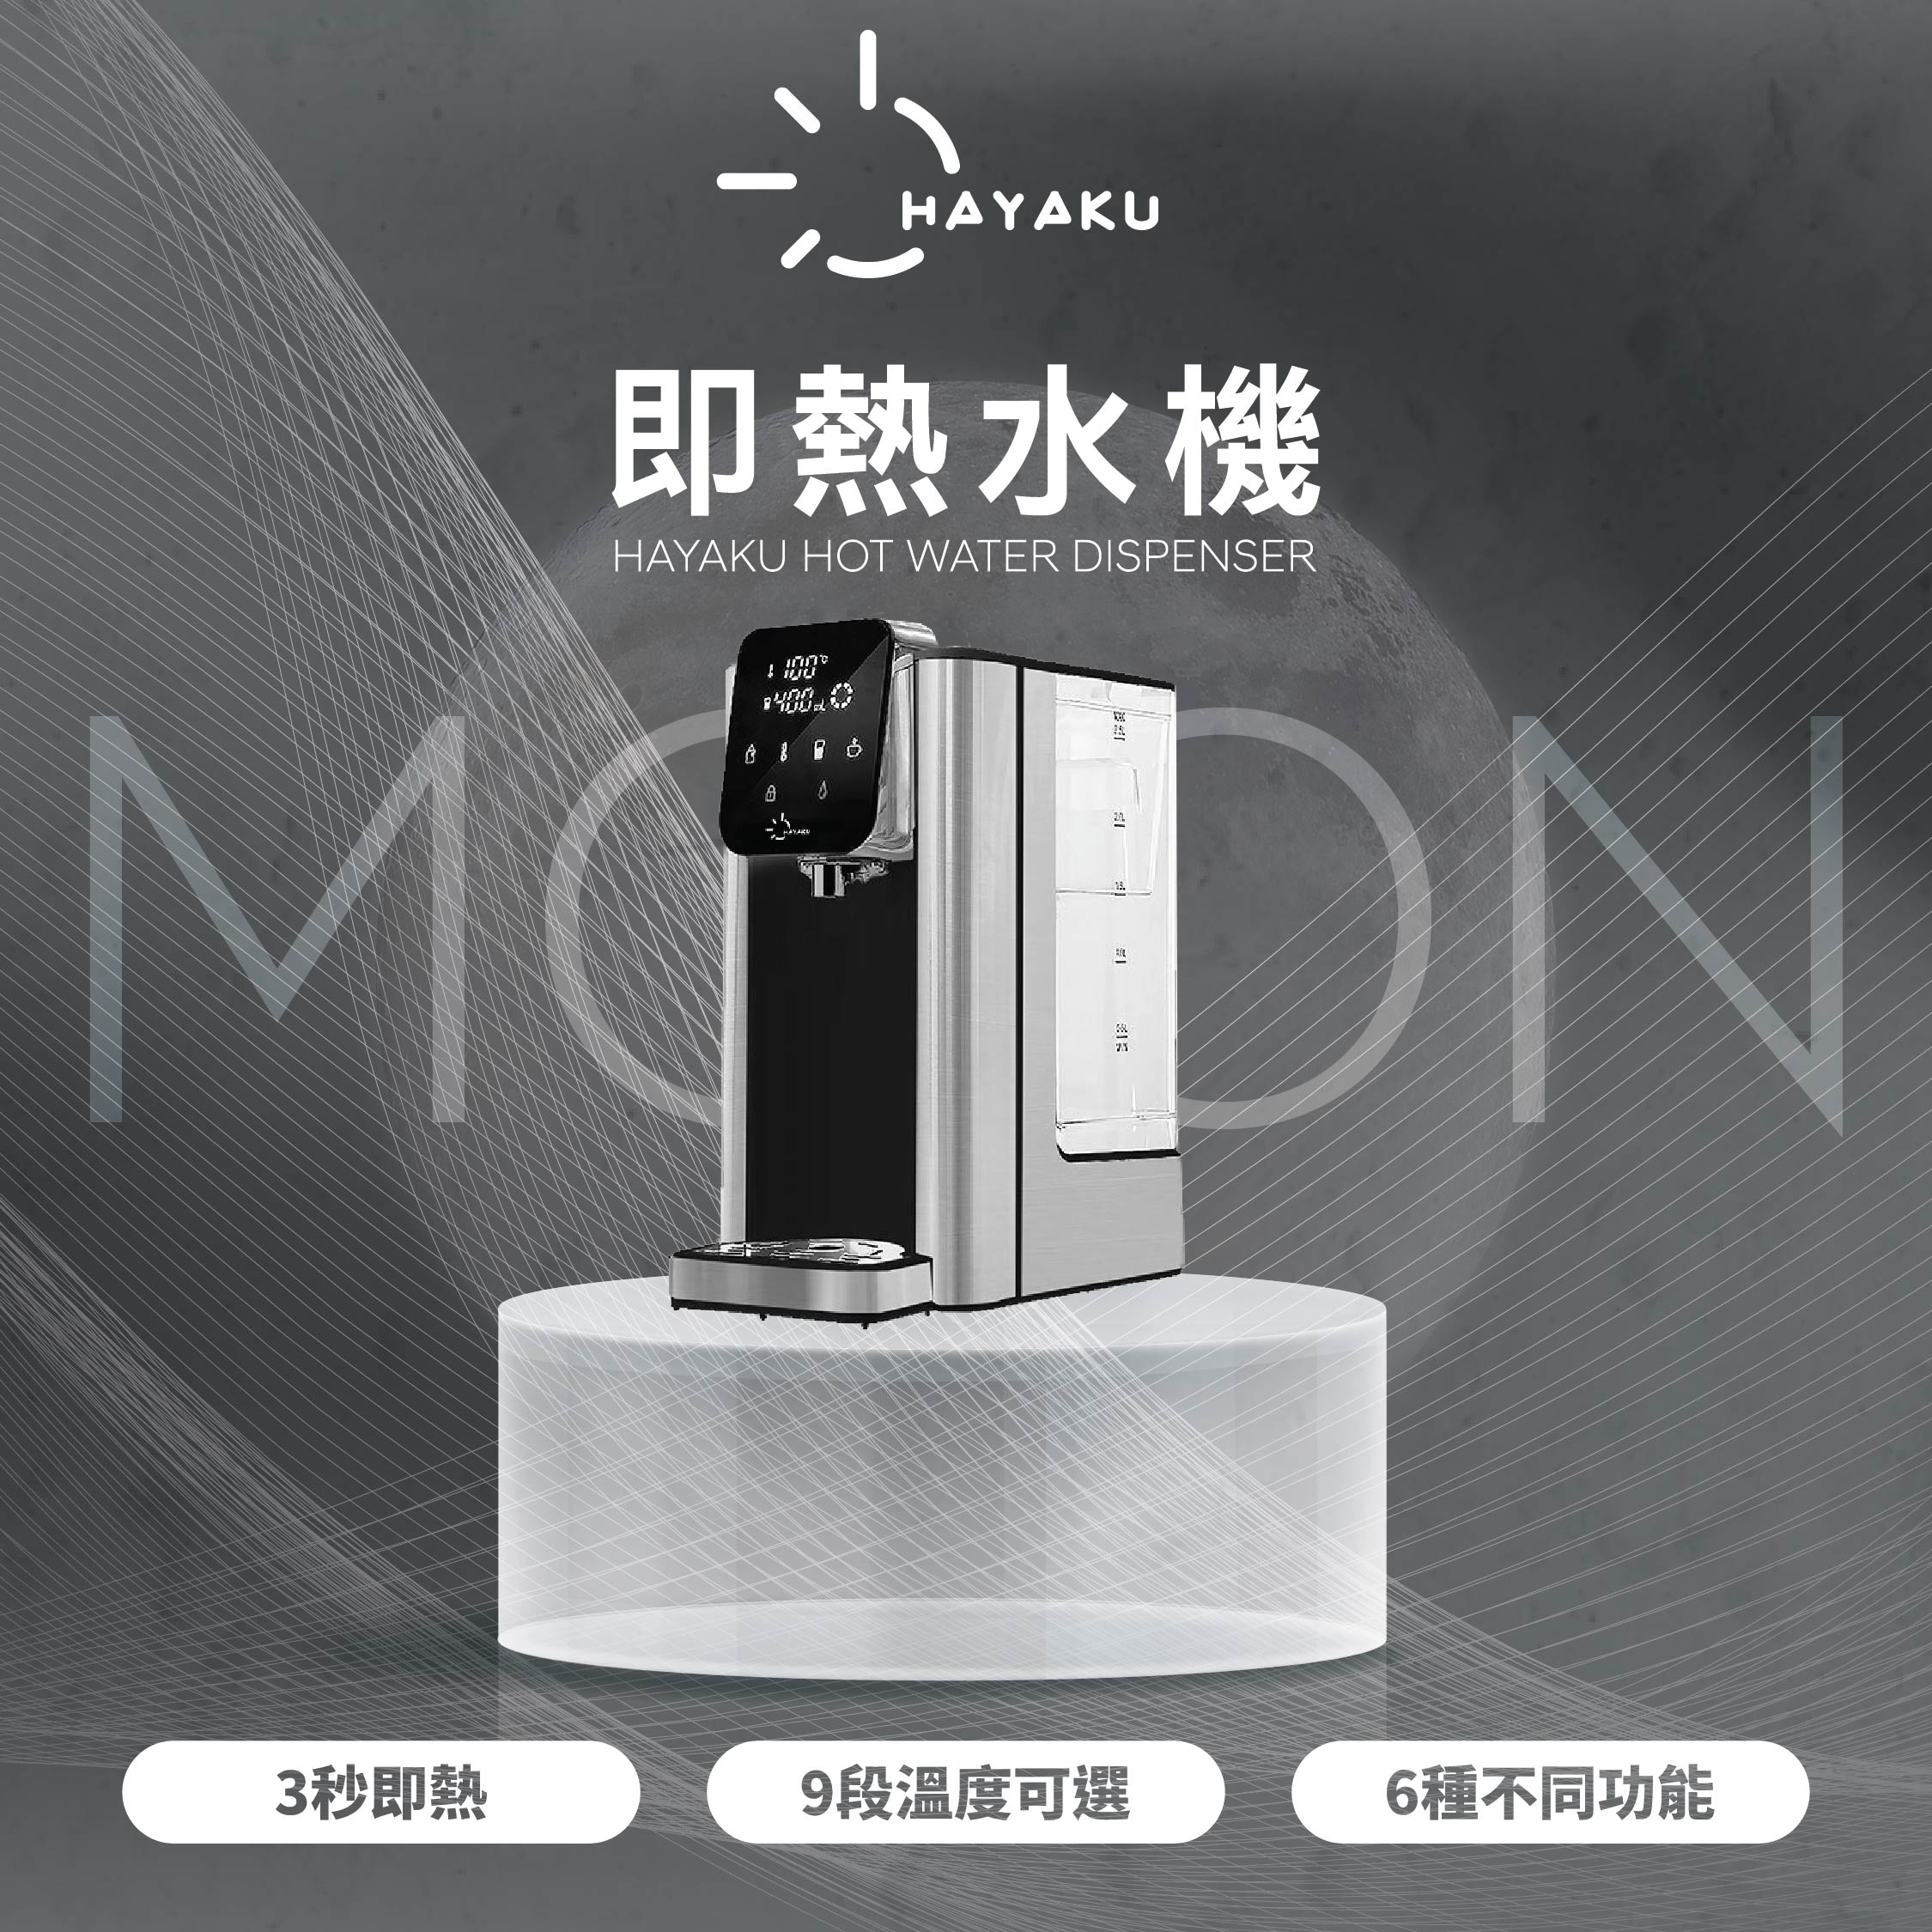 Hayaku Moon 瞬熱式淨水器 (4L) 即熱水機 免安裝 日式生活品味小家電